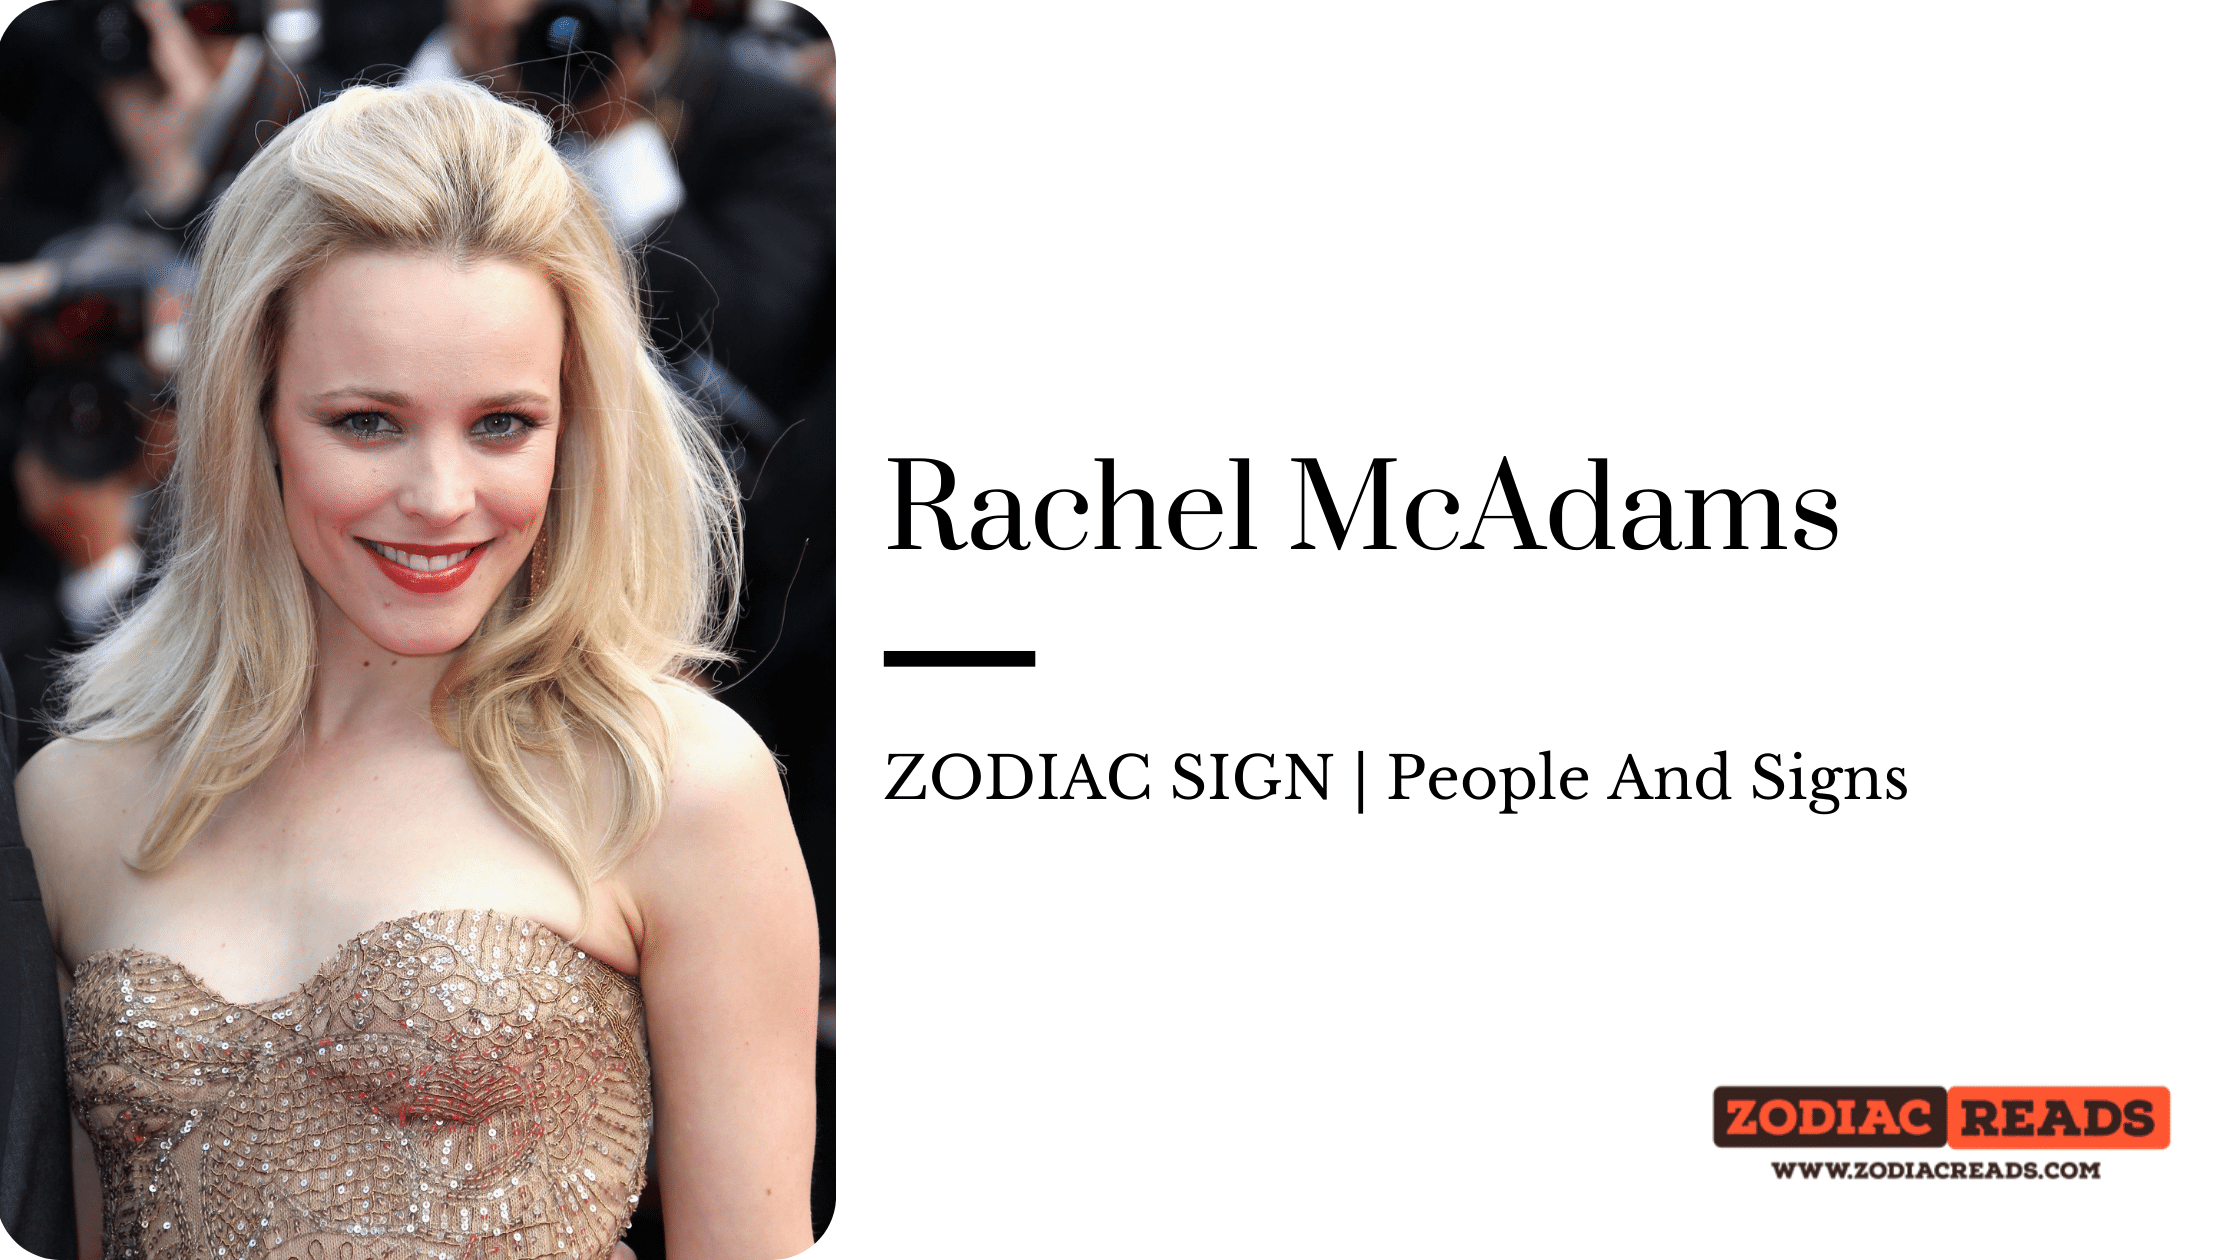 Rachel McAdams zodiac